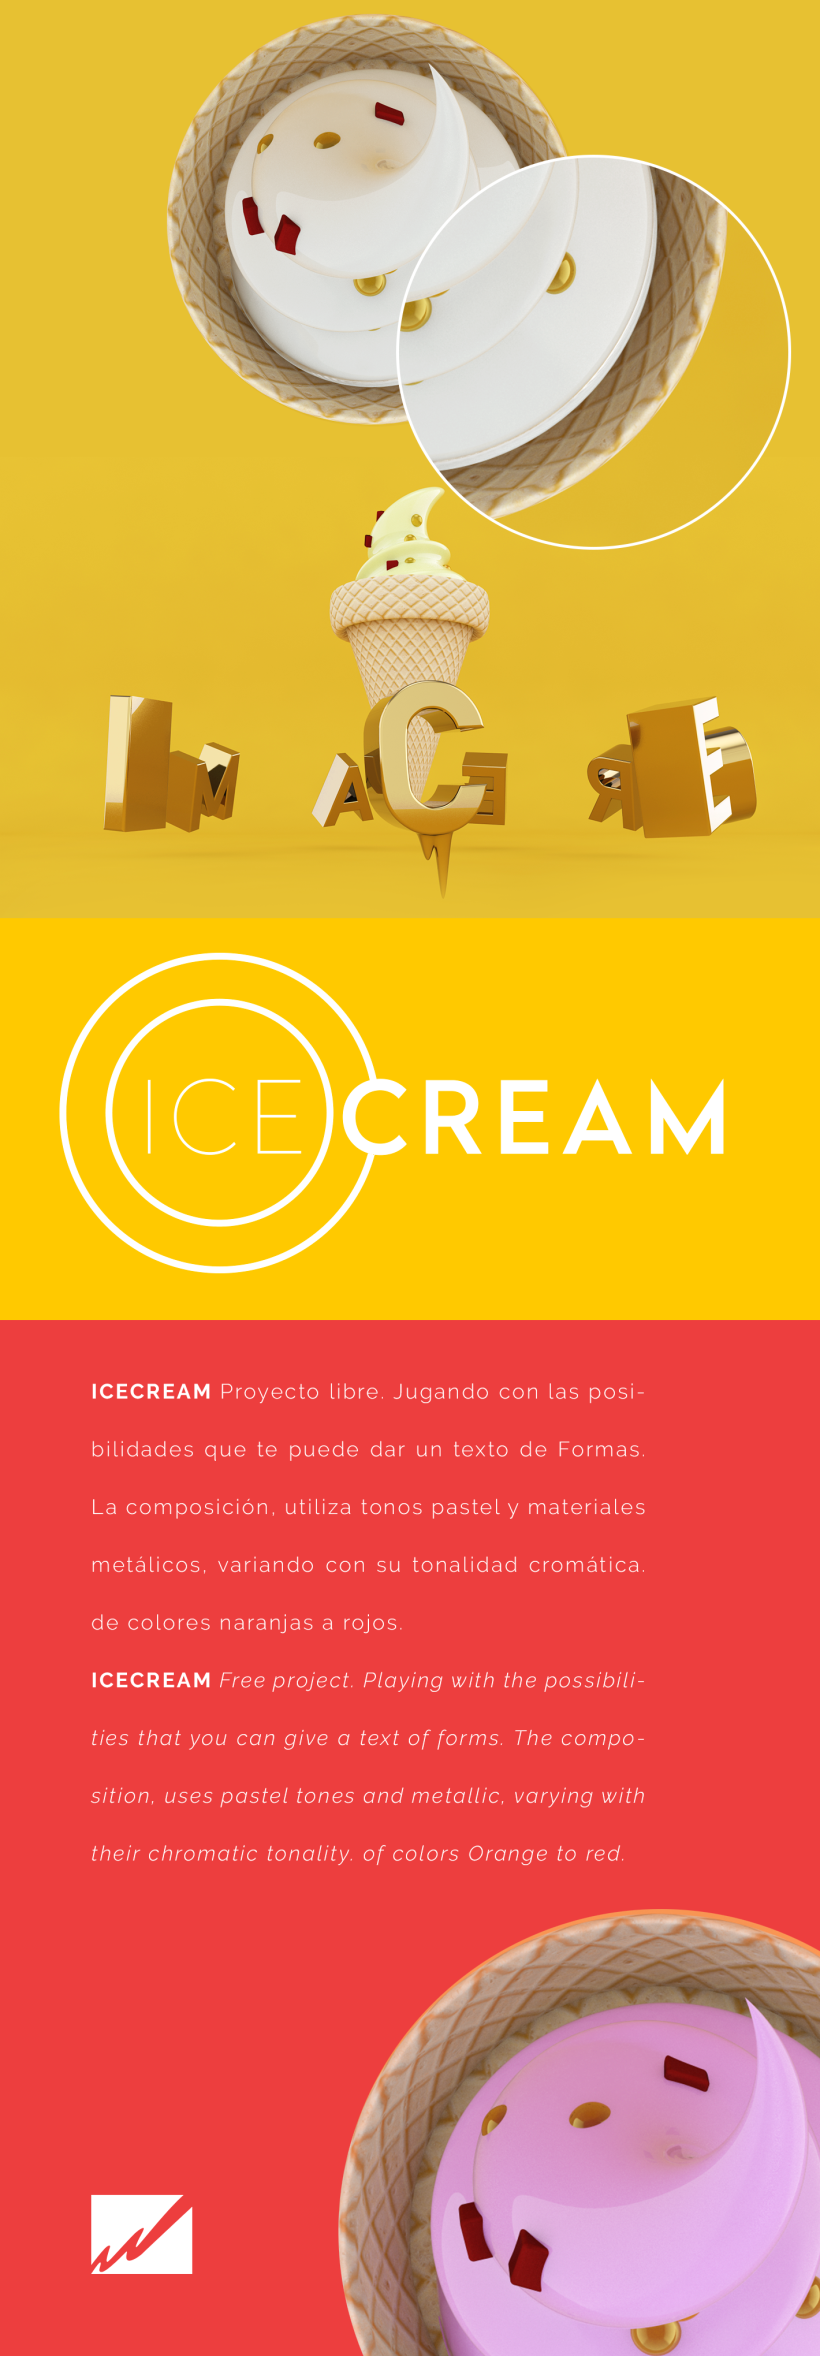 ICE-CREAM 1